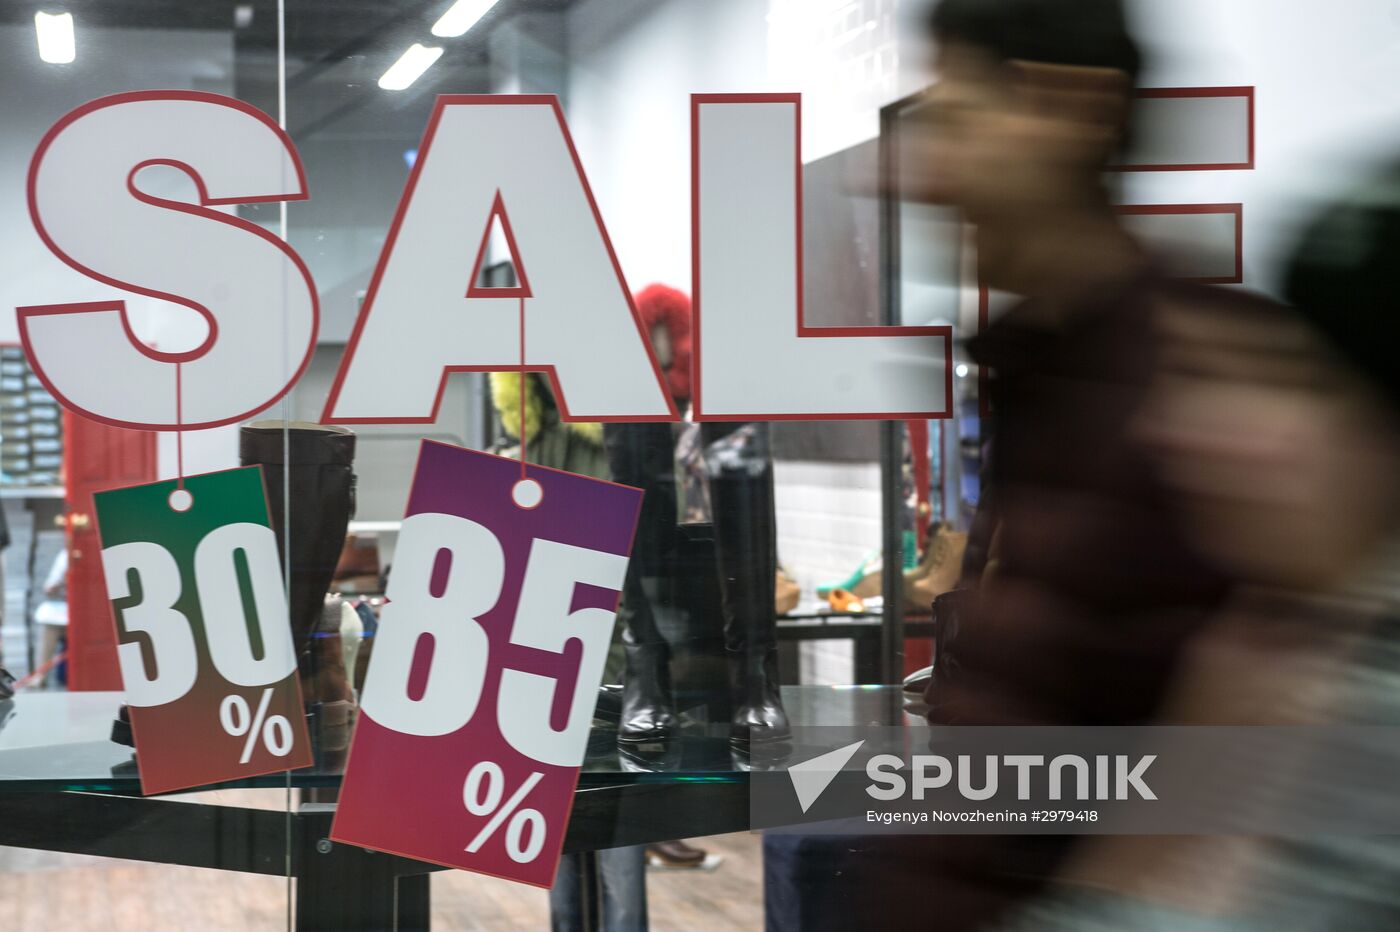 Sale season kicks off in Moscow